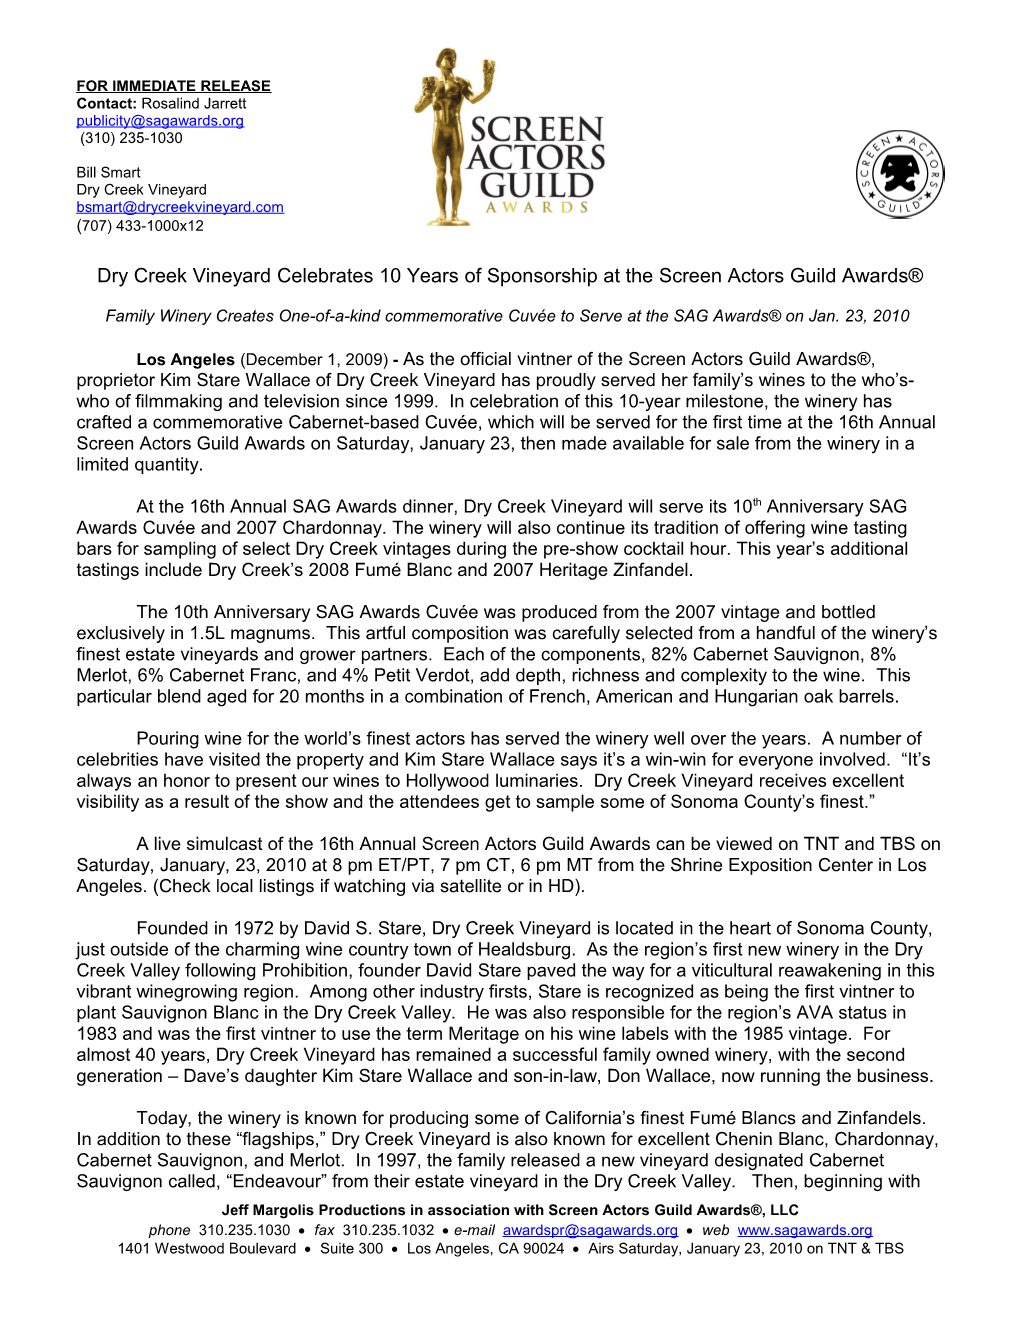 Dry Creek Vineyard Celebrates 10 Years of Sponsorship at the Screen Actors Guild Awards - 2